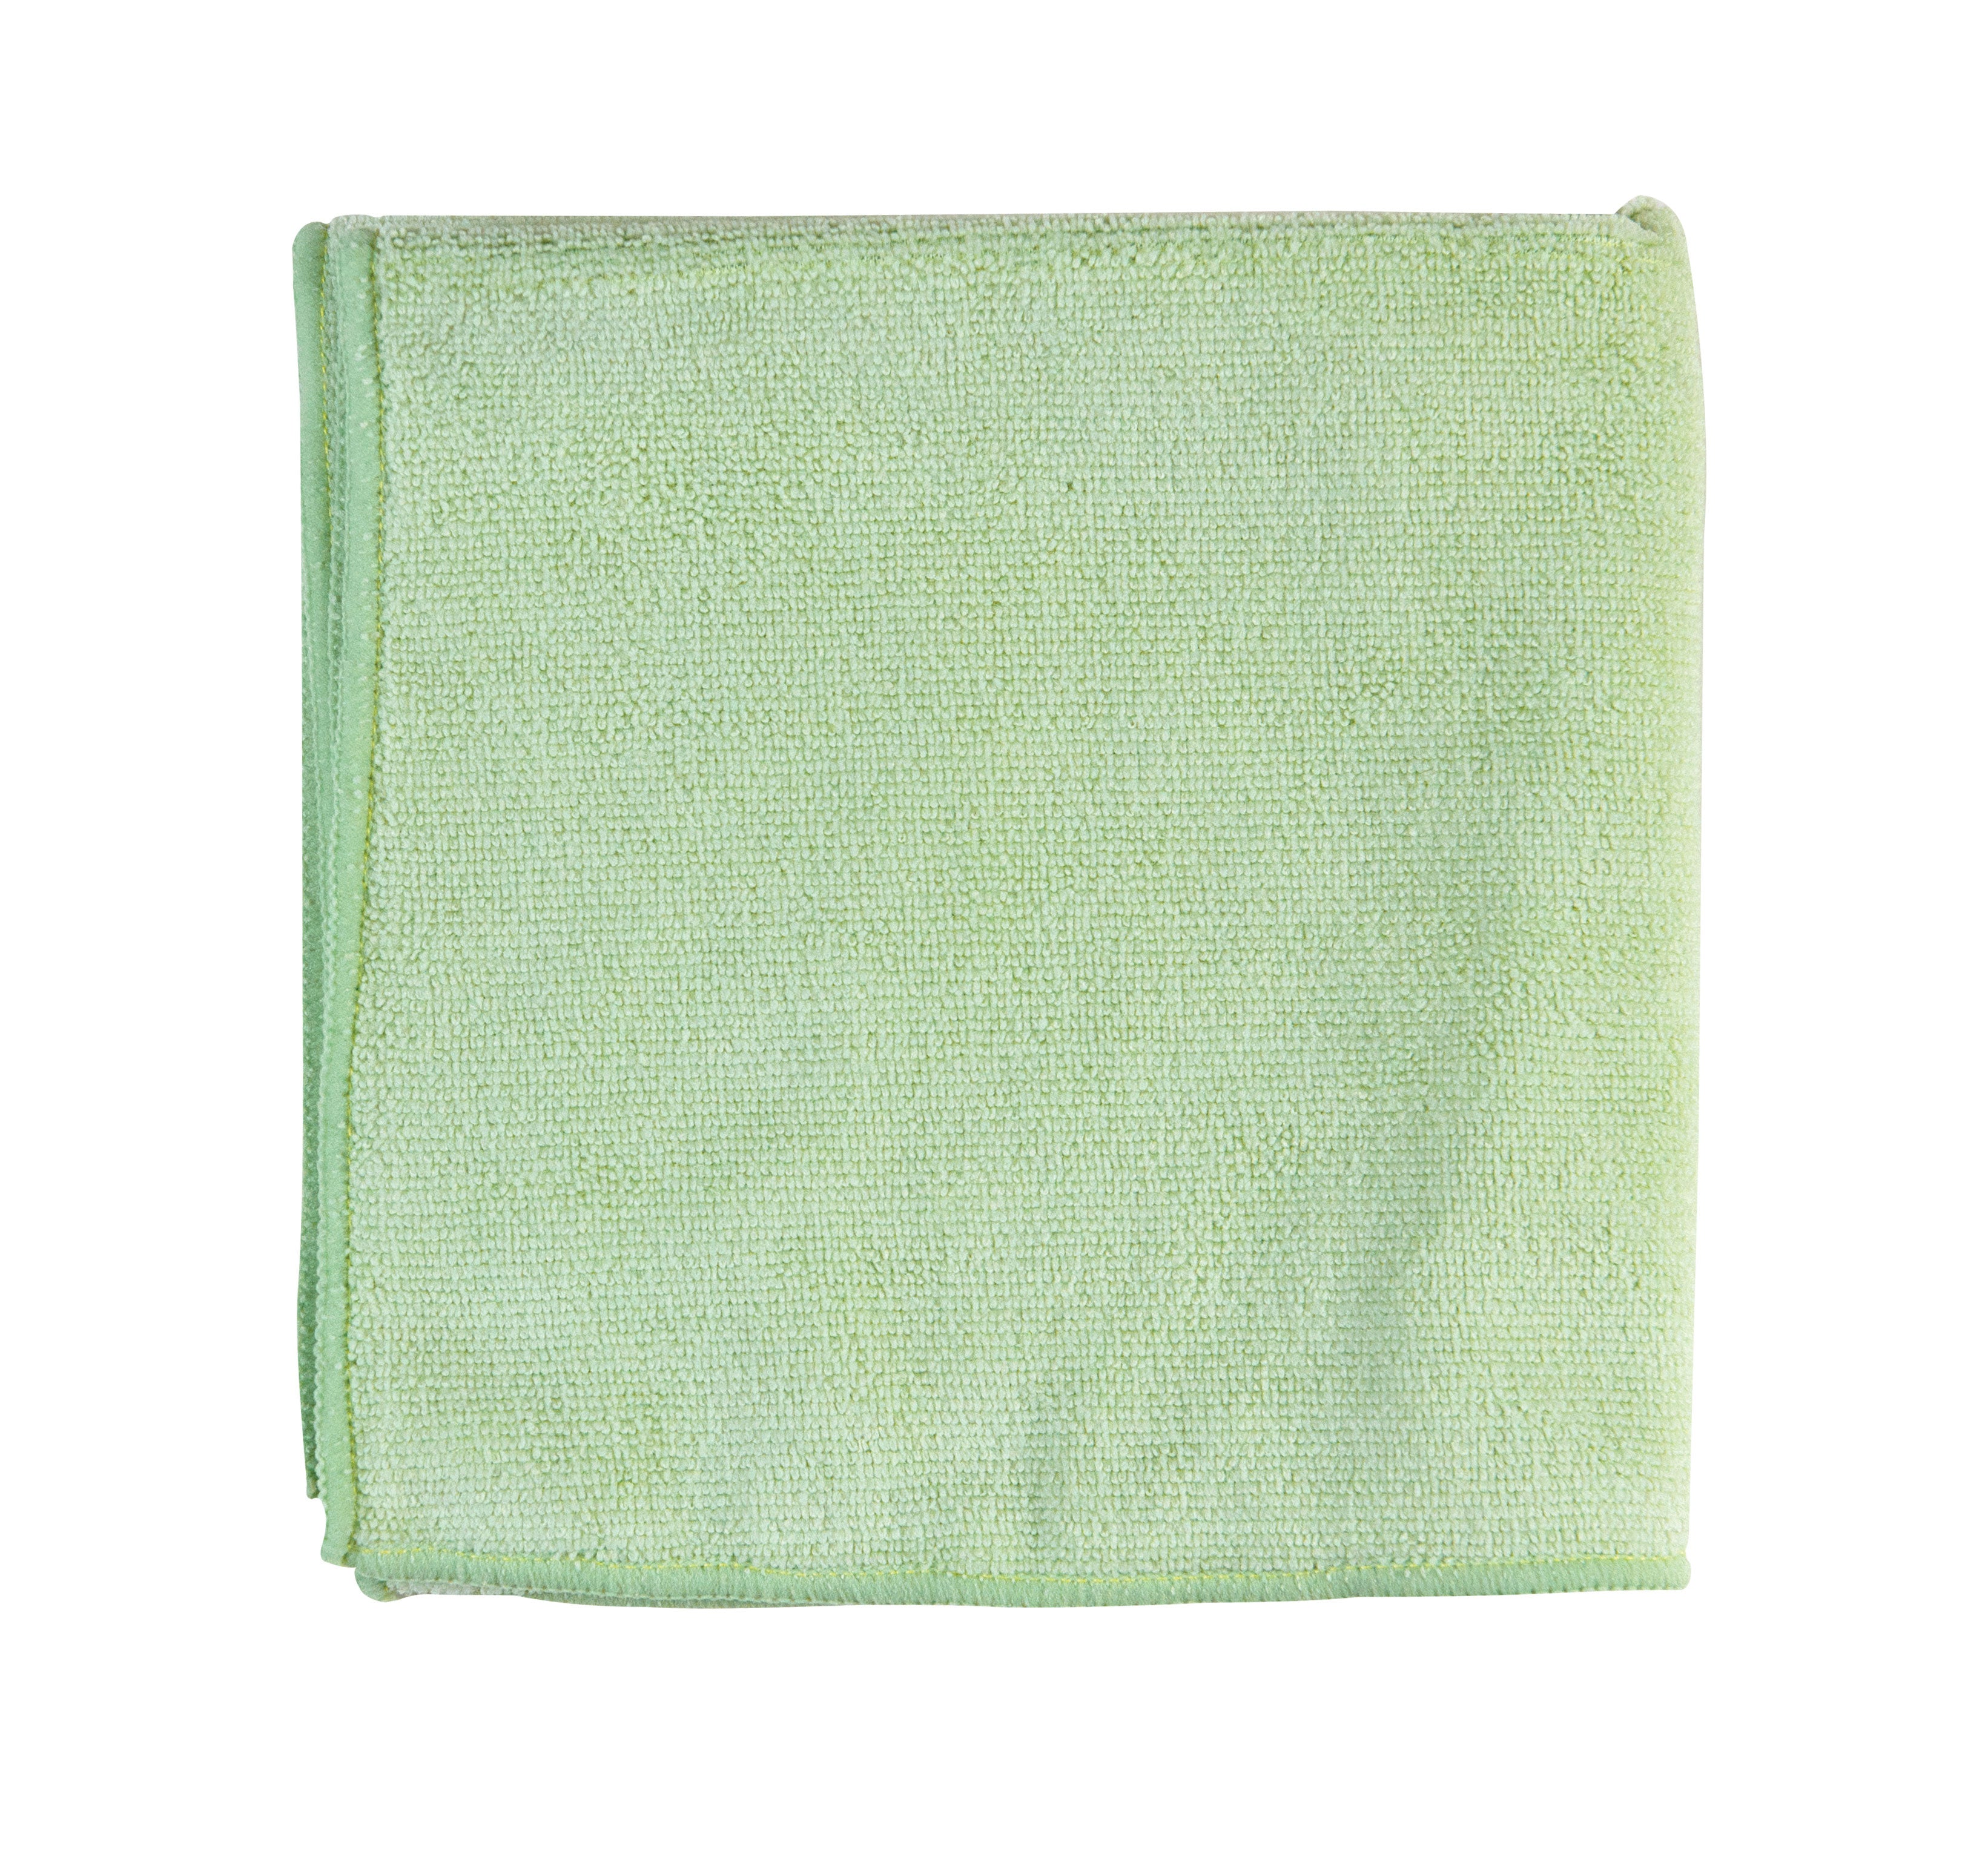 light green towels